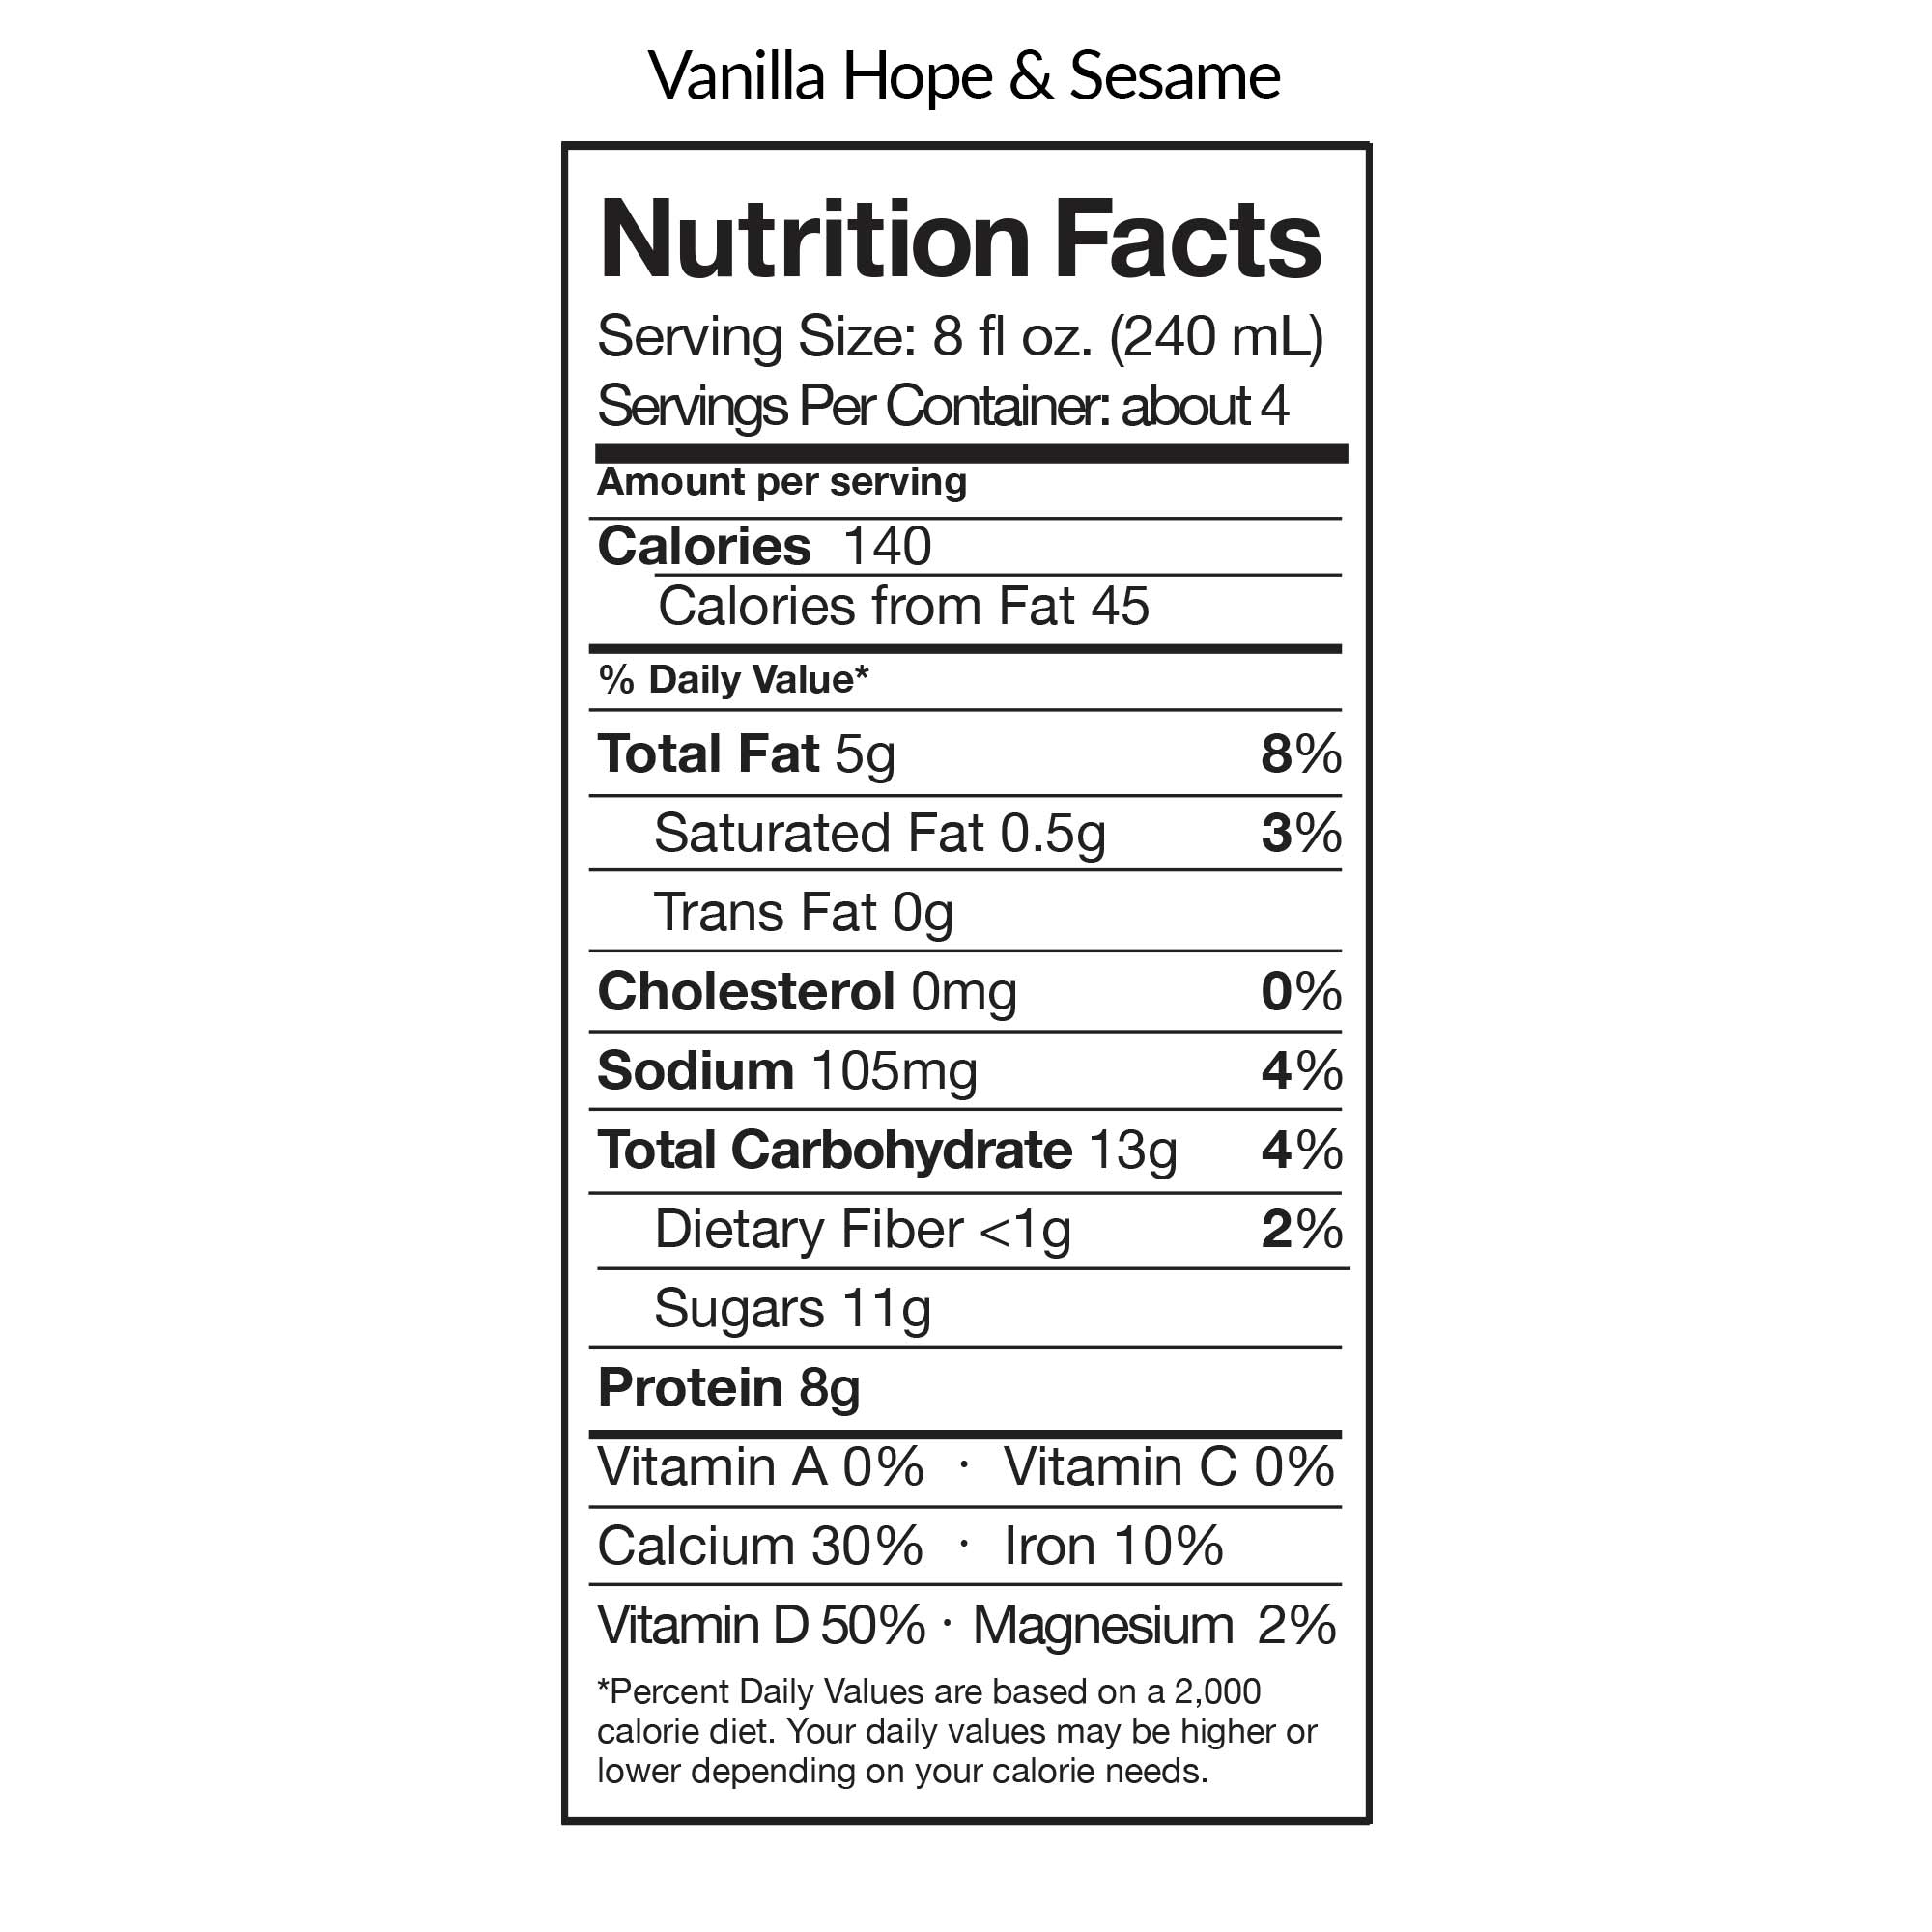 Vanilla Non-GMO Aseptic Sesamemilk (6 Pack)